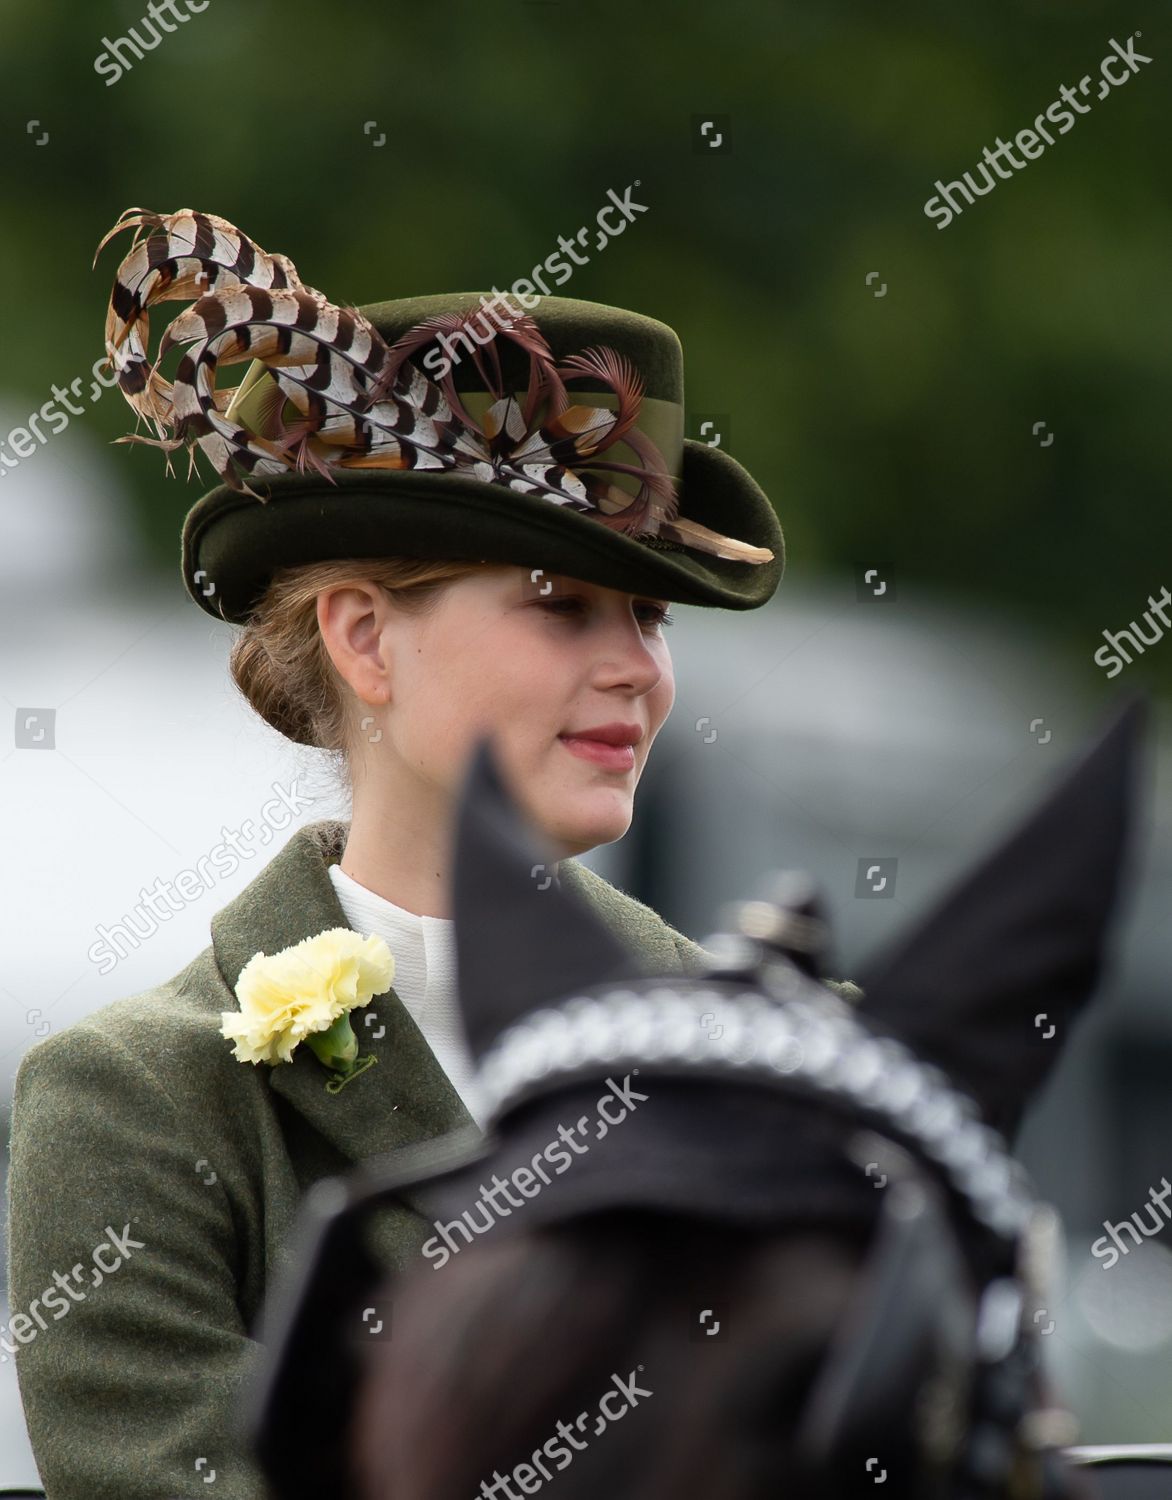 royal-windsor-horse-show-day-3-berkshire-uk-shutterstock-editorial-12195342w.jpg